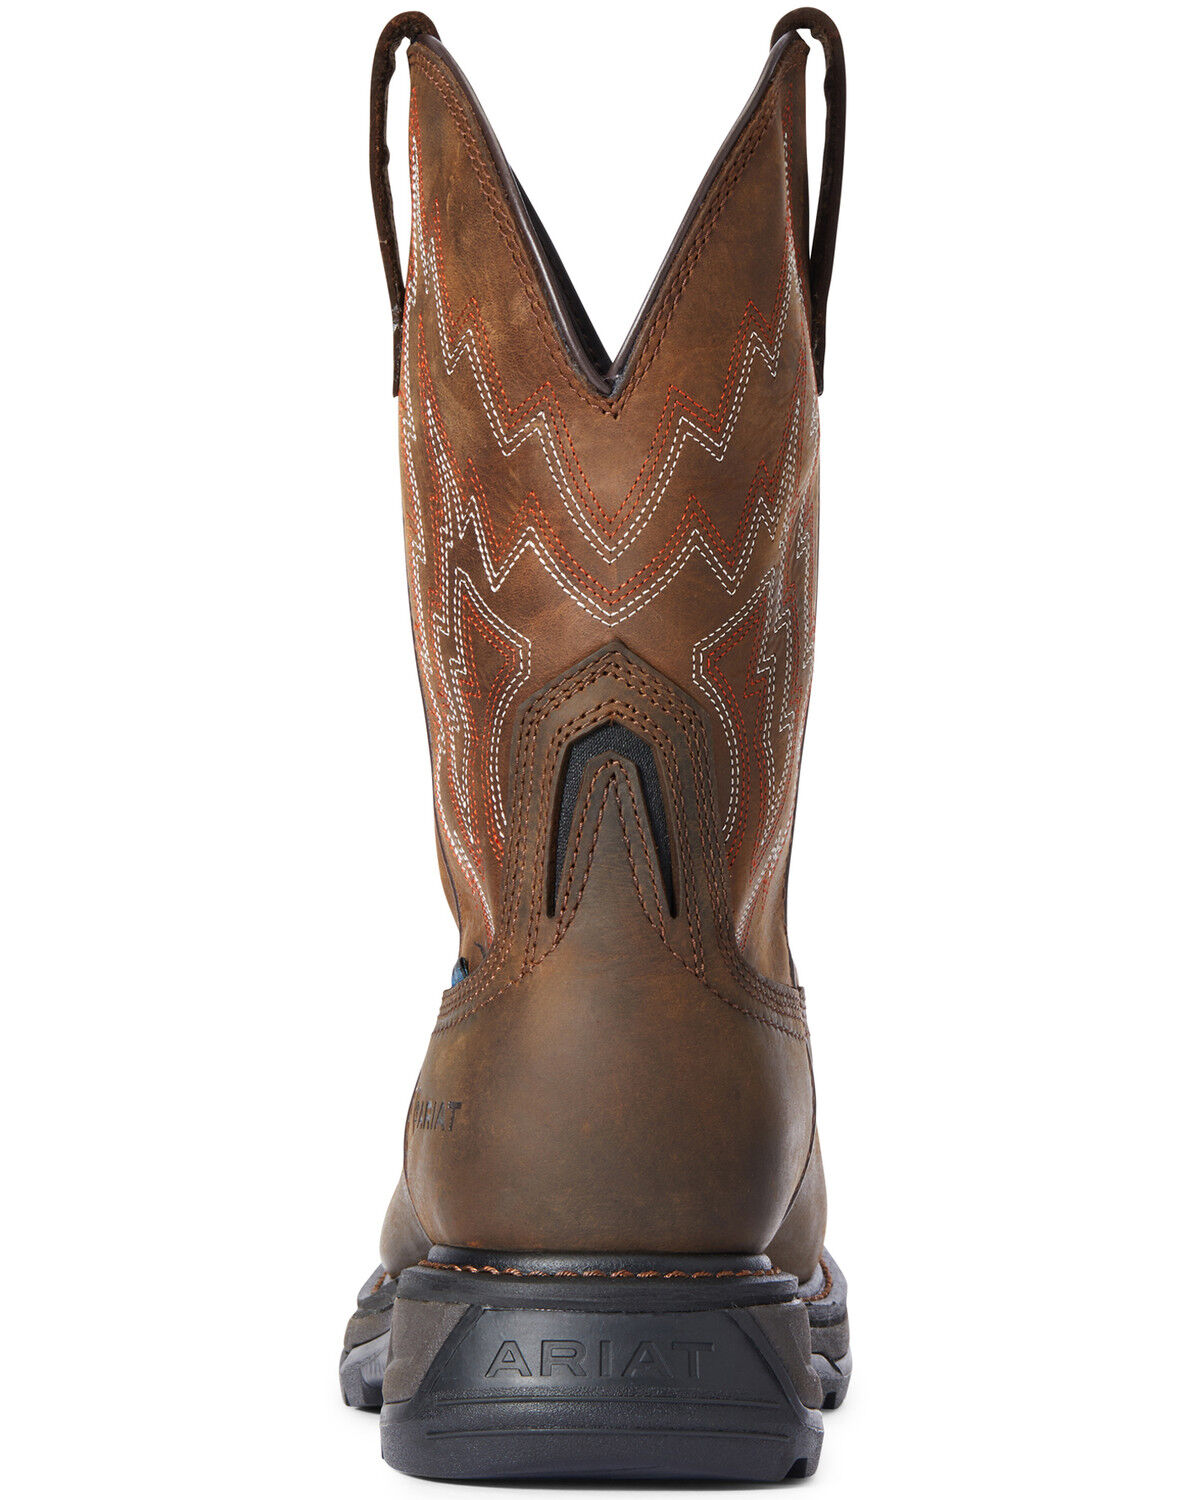 composite toe cowboy work boots